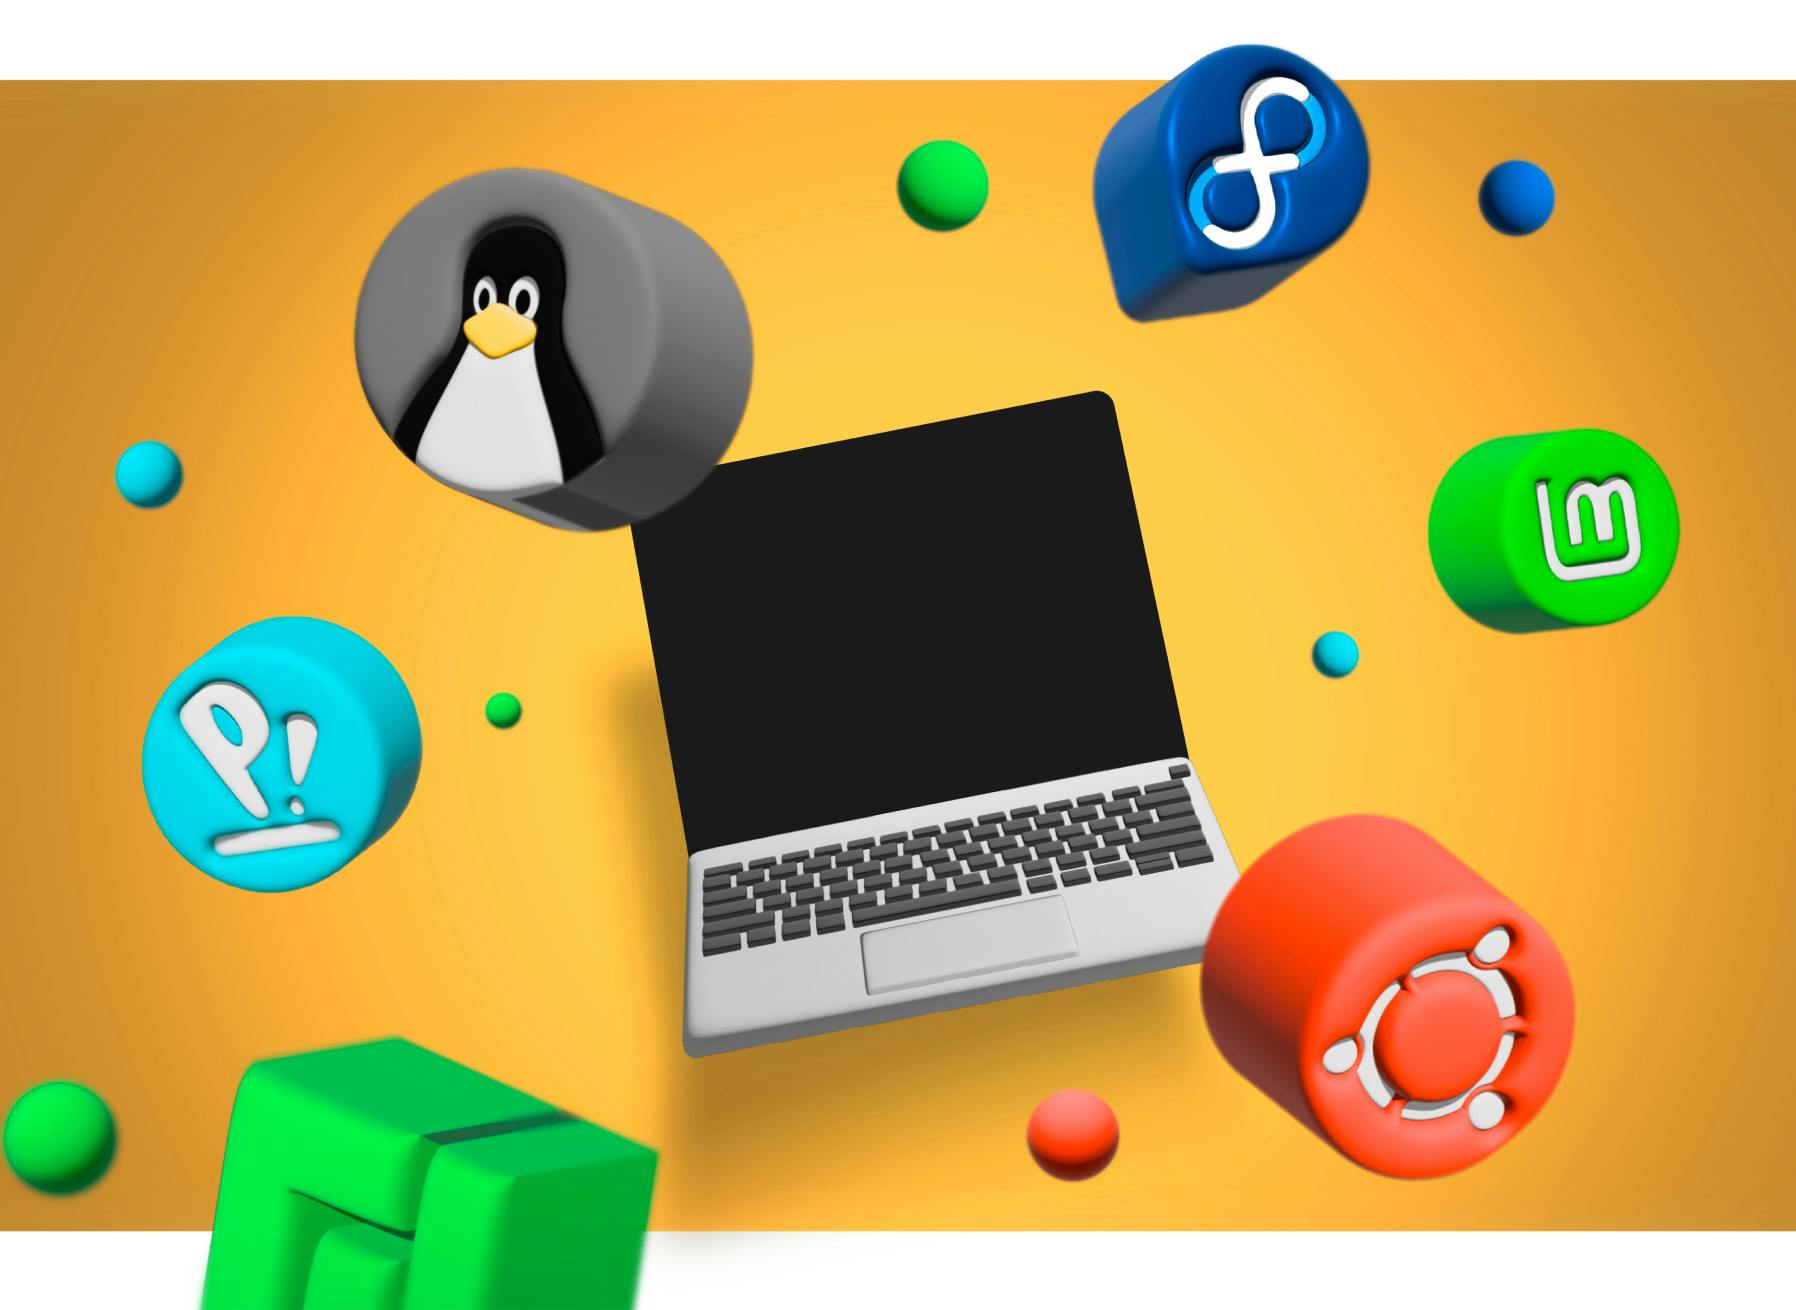 Linux distro logos